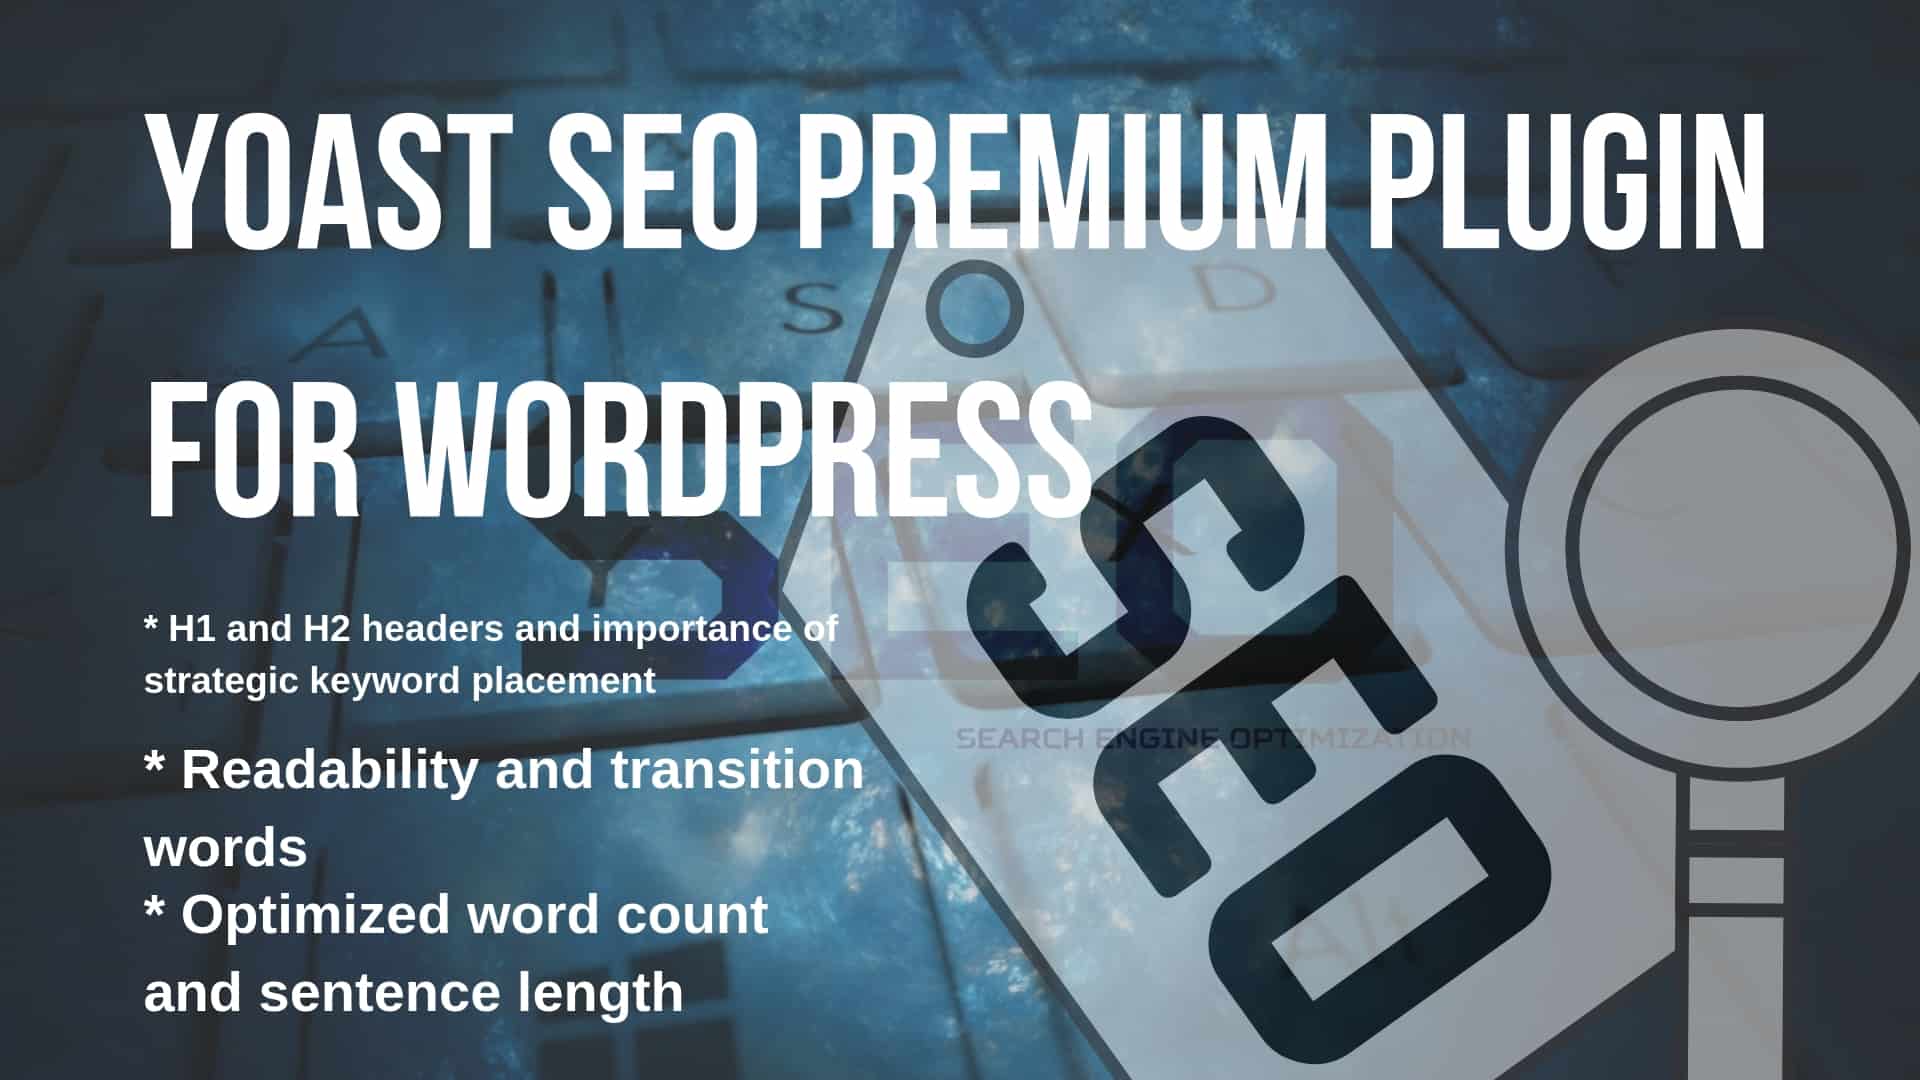 Yoast SEO premium plugin for WordPress